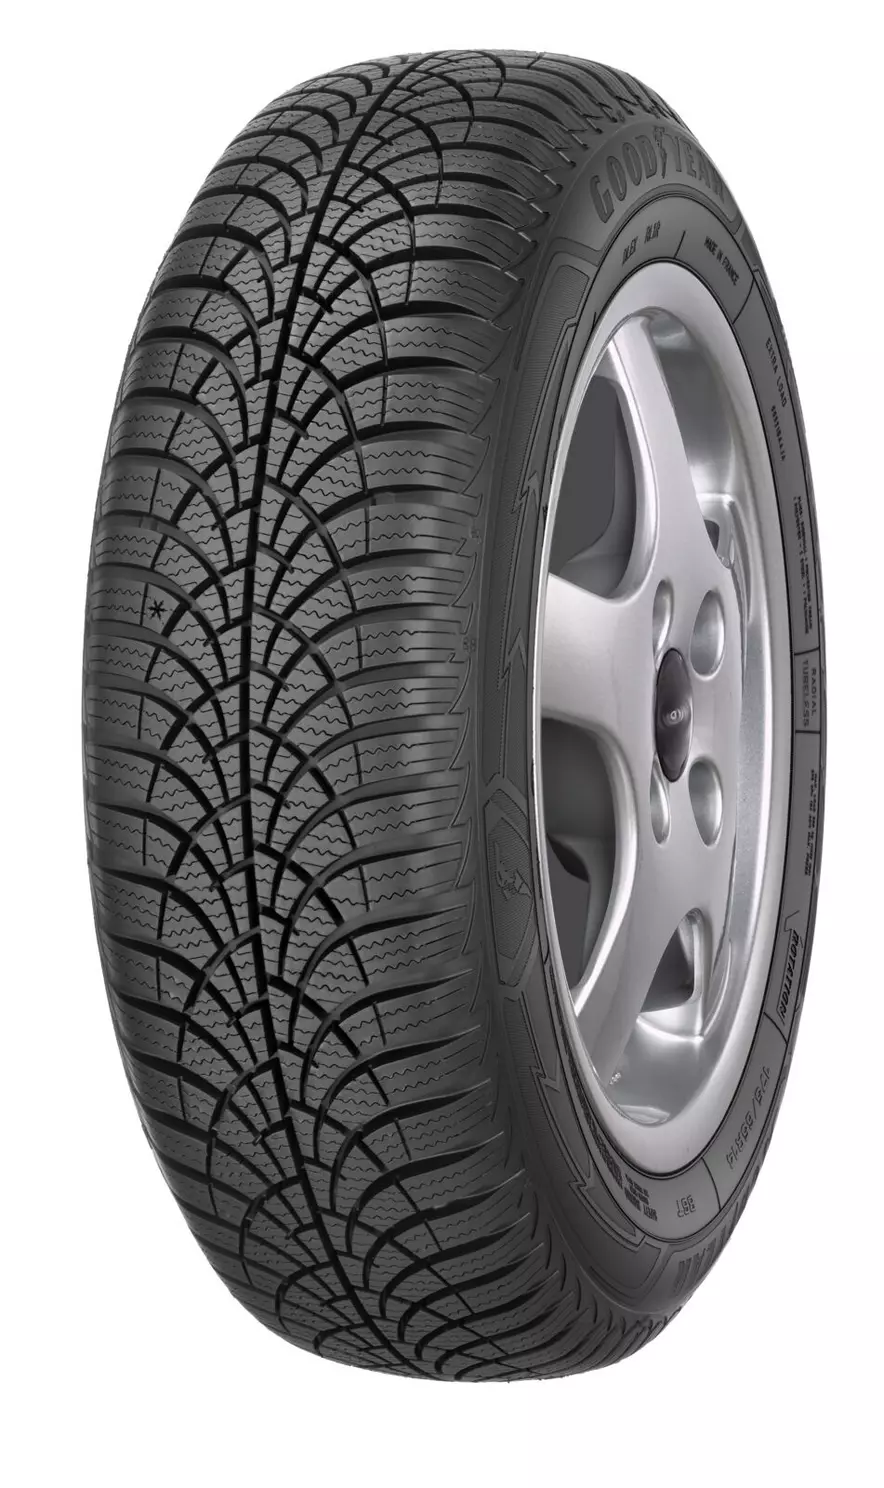 Buy Goodyear UltraGrip 9 Plus Online Tyres